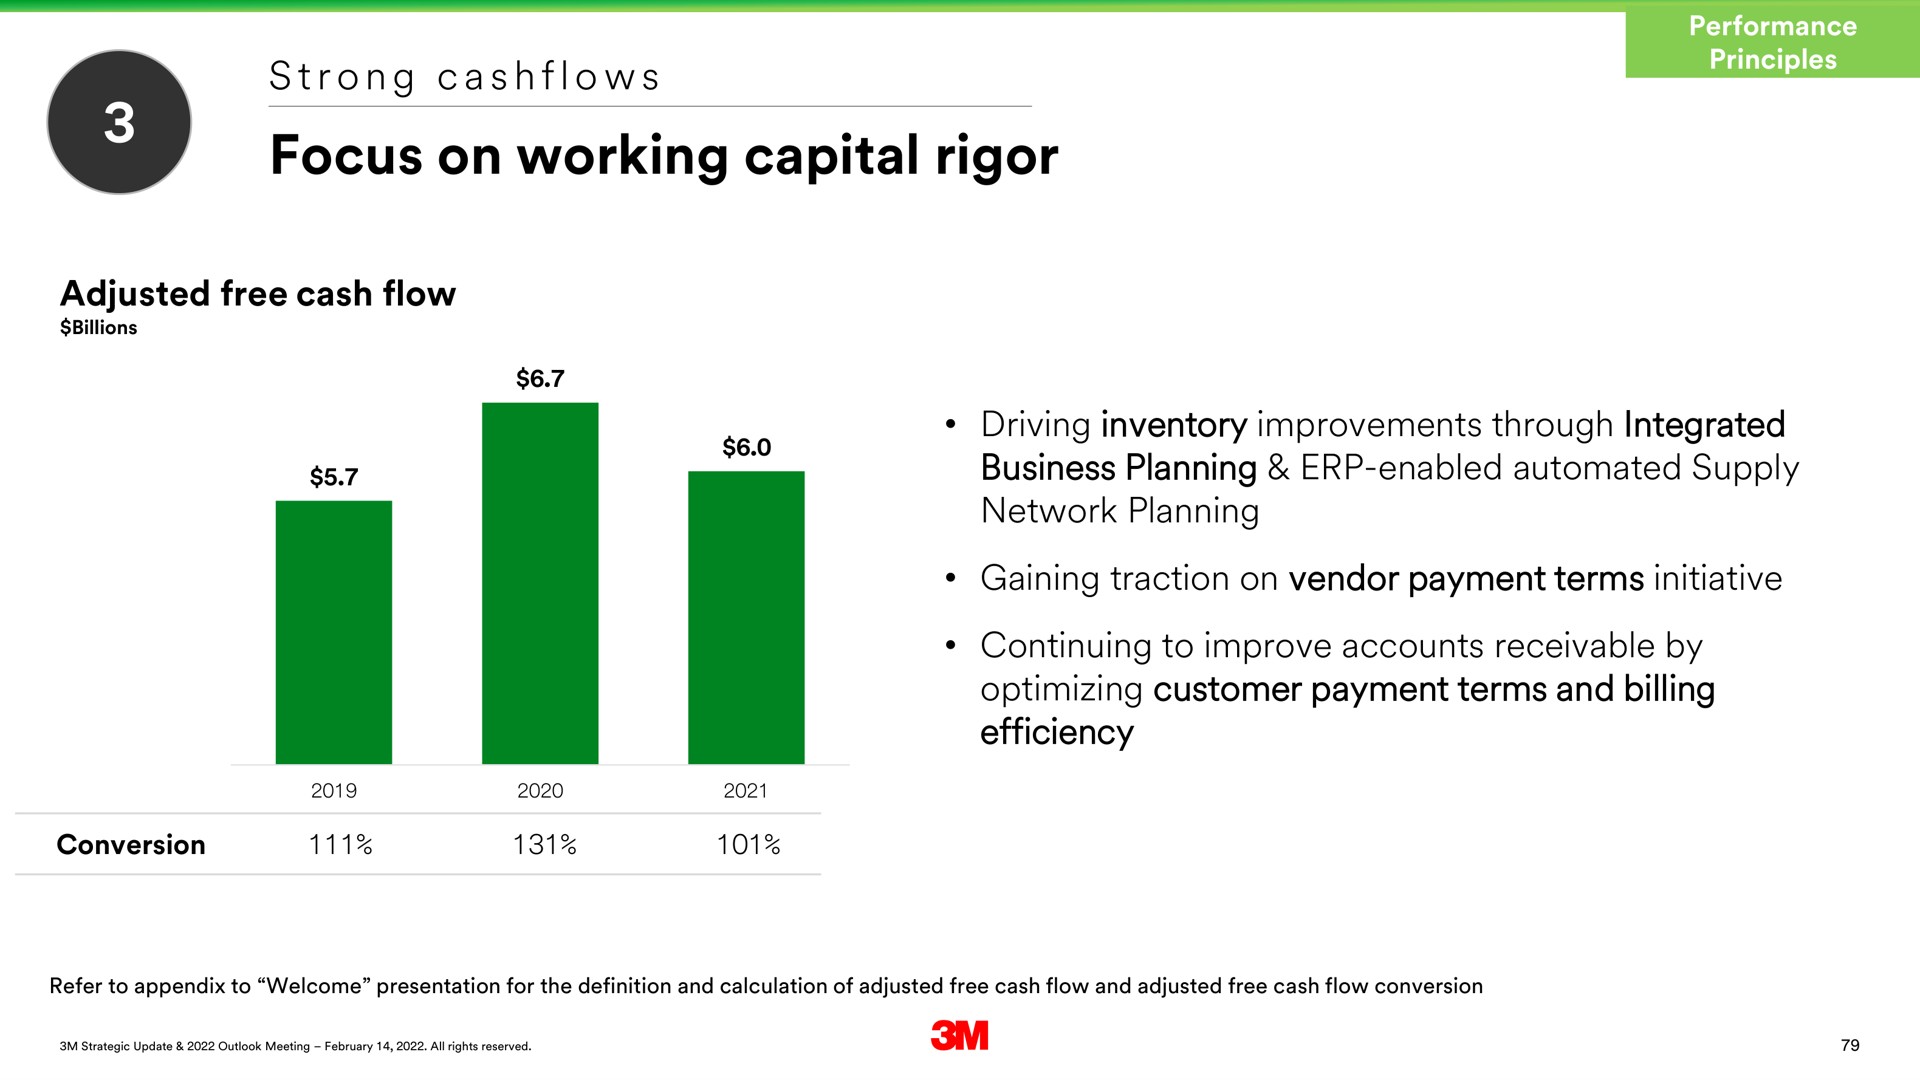 focus on working capital rigor | 3M